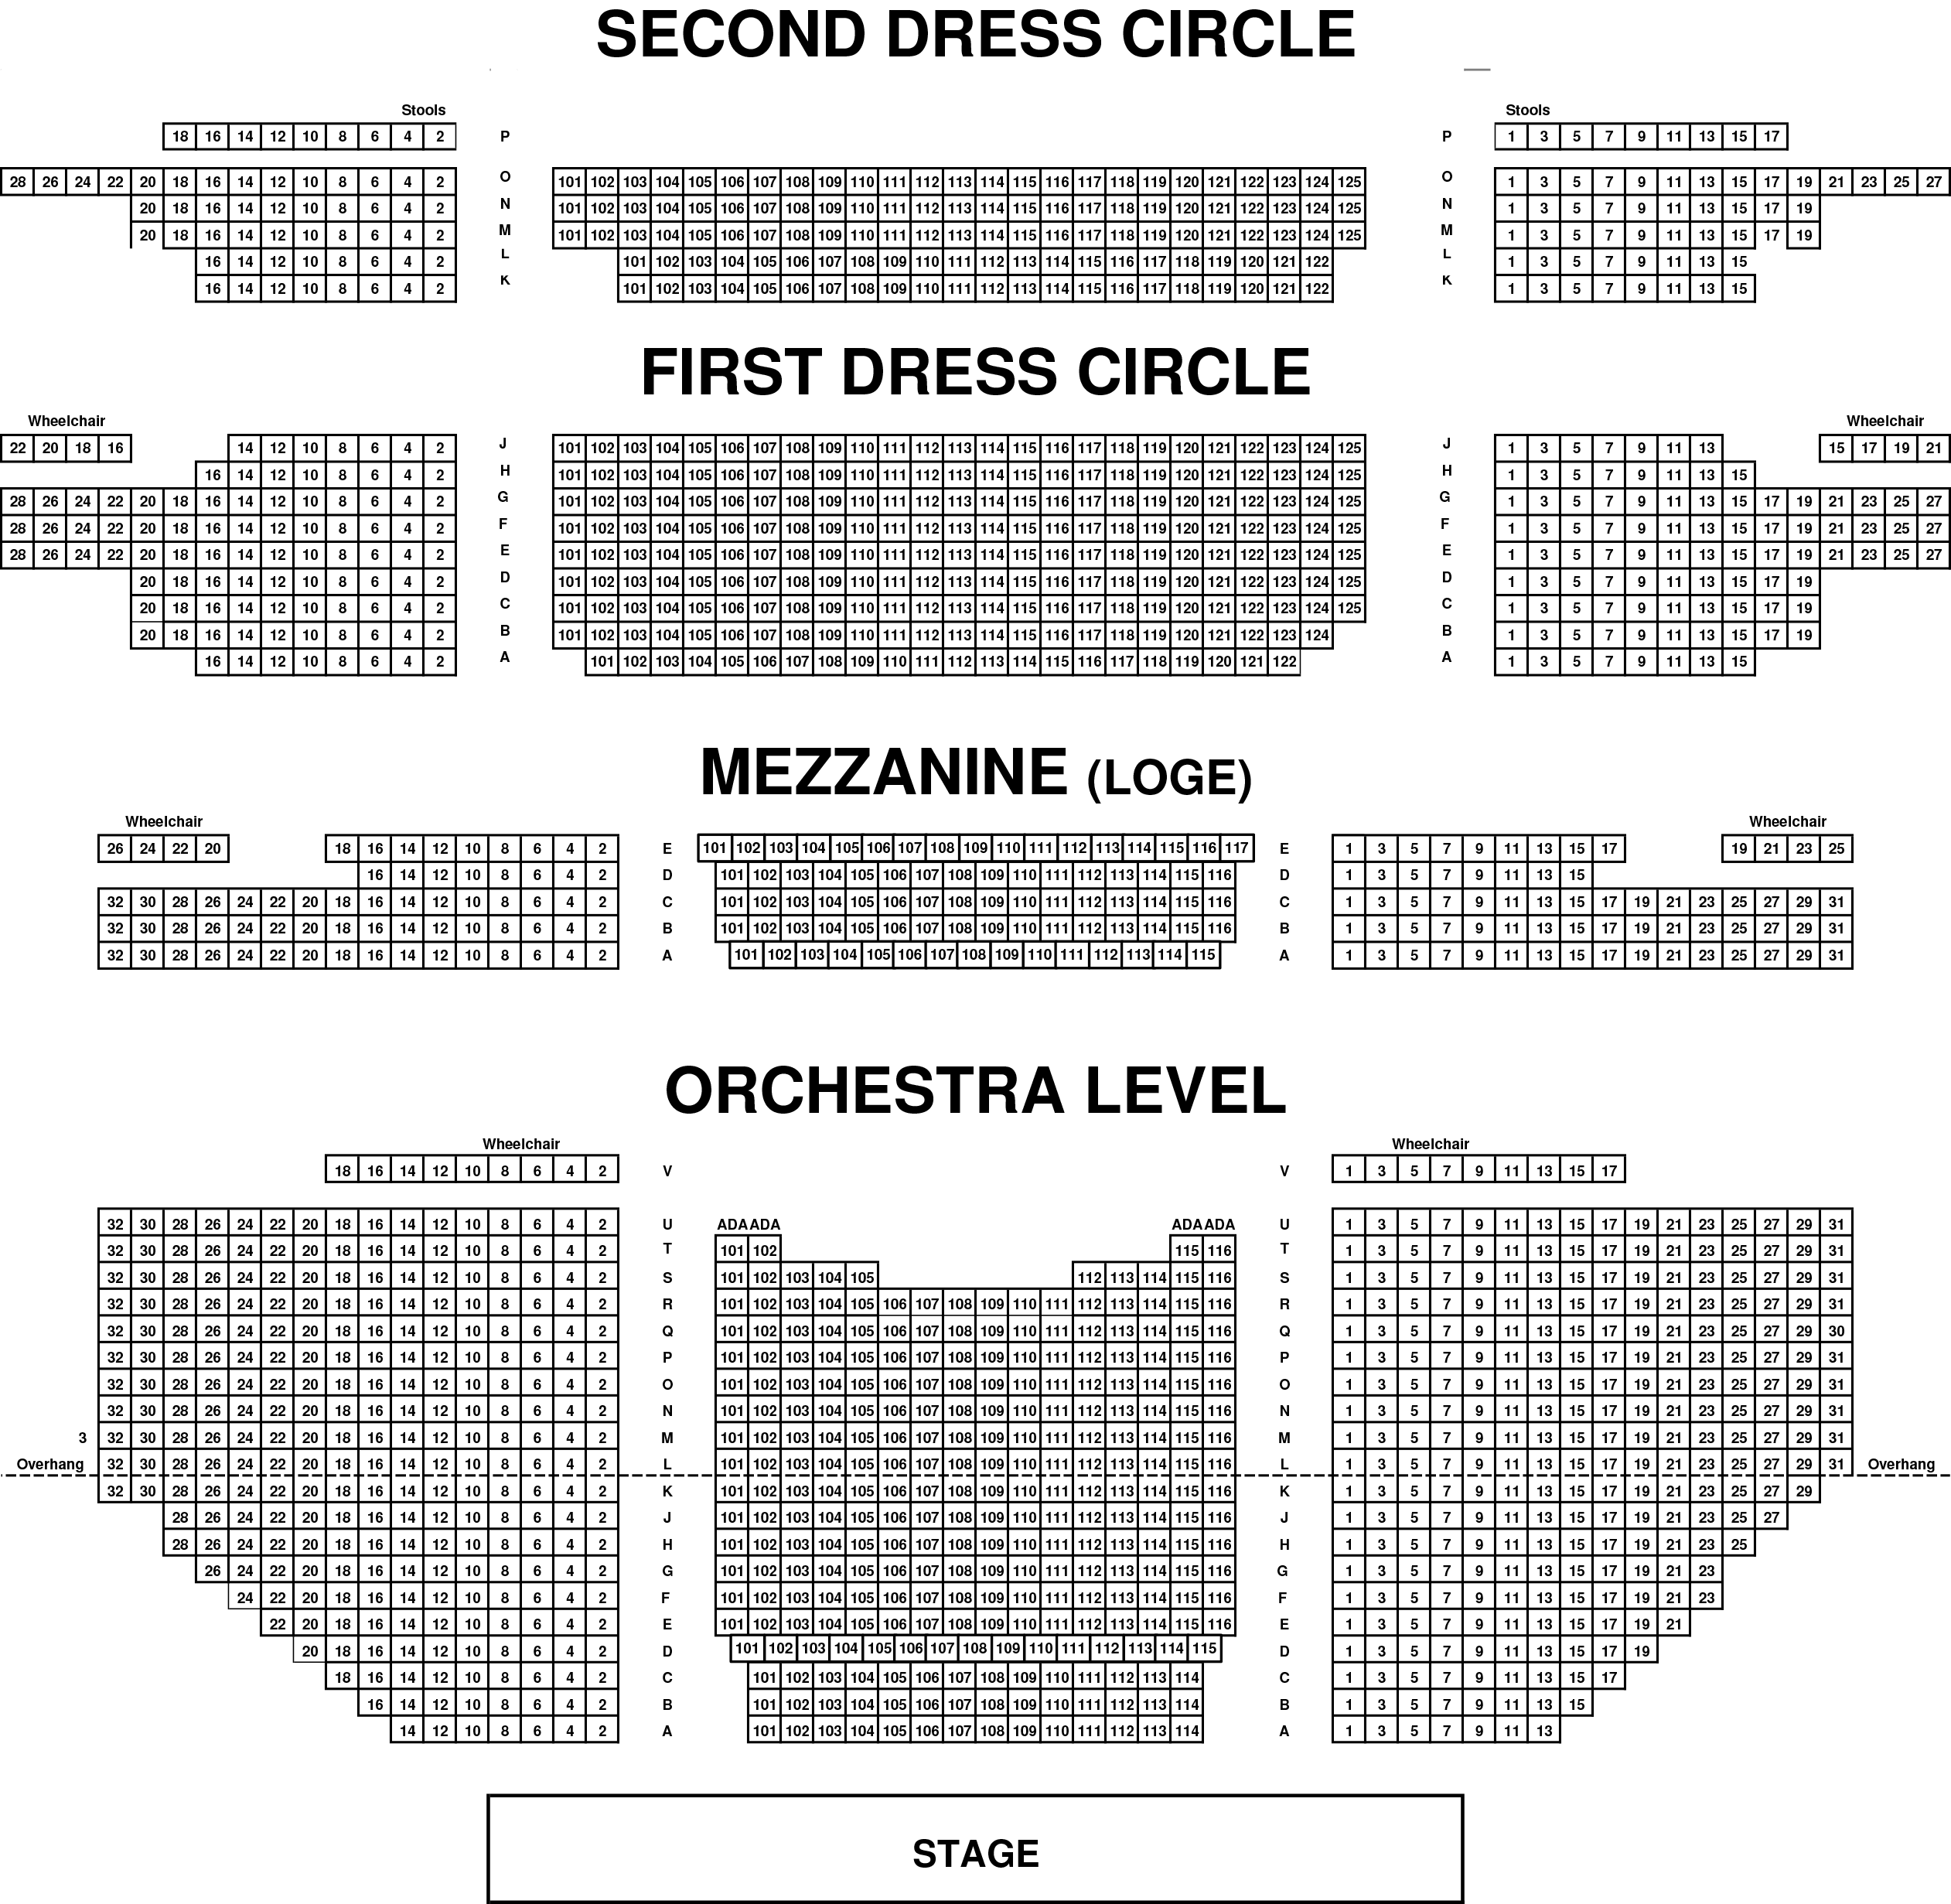 richmond landmark theater seating